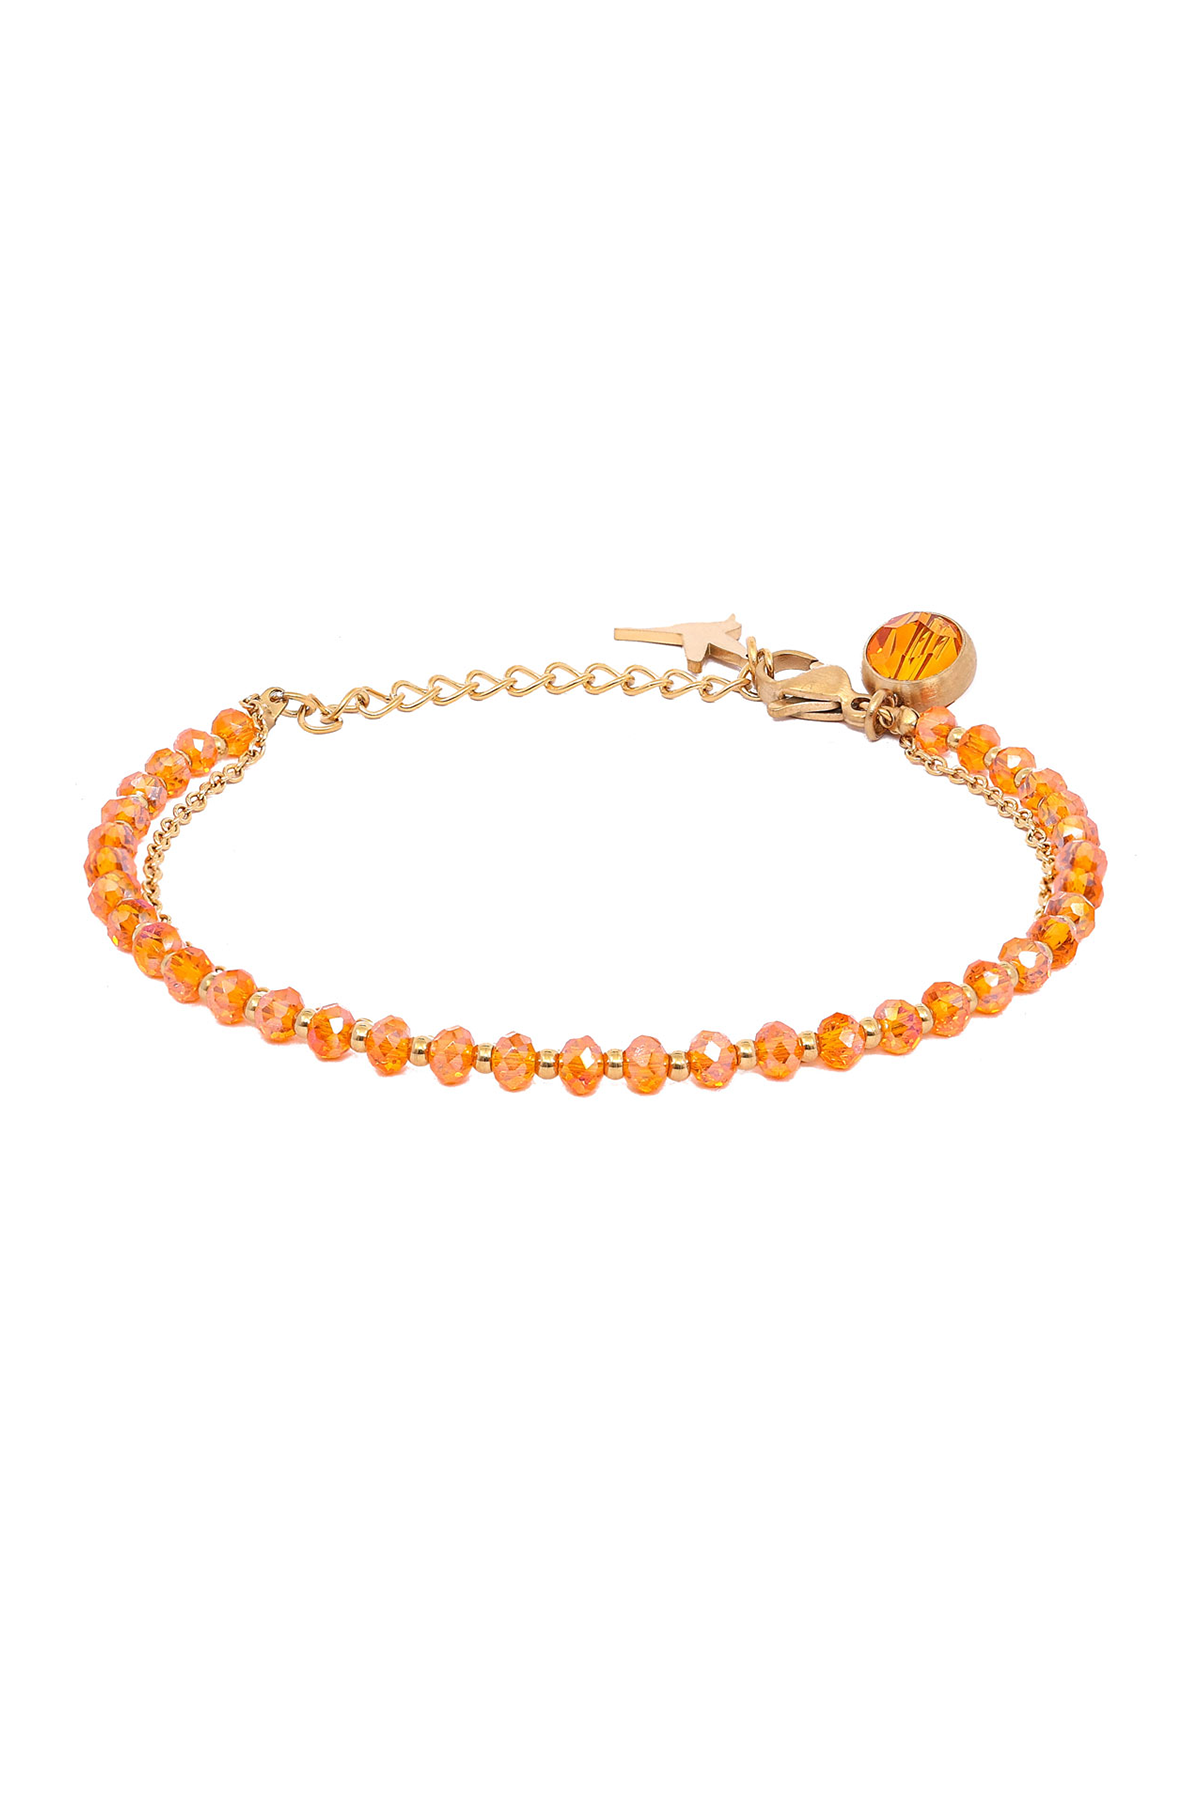 Iben crystal bracelet - Juicy orange